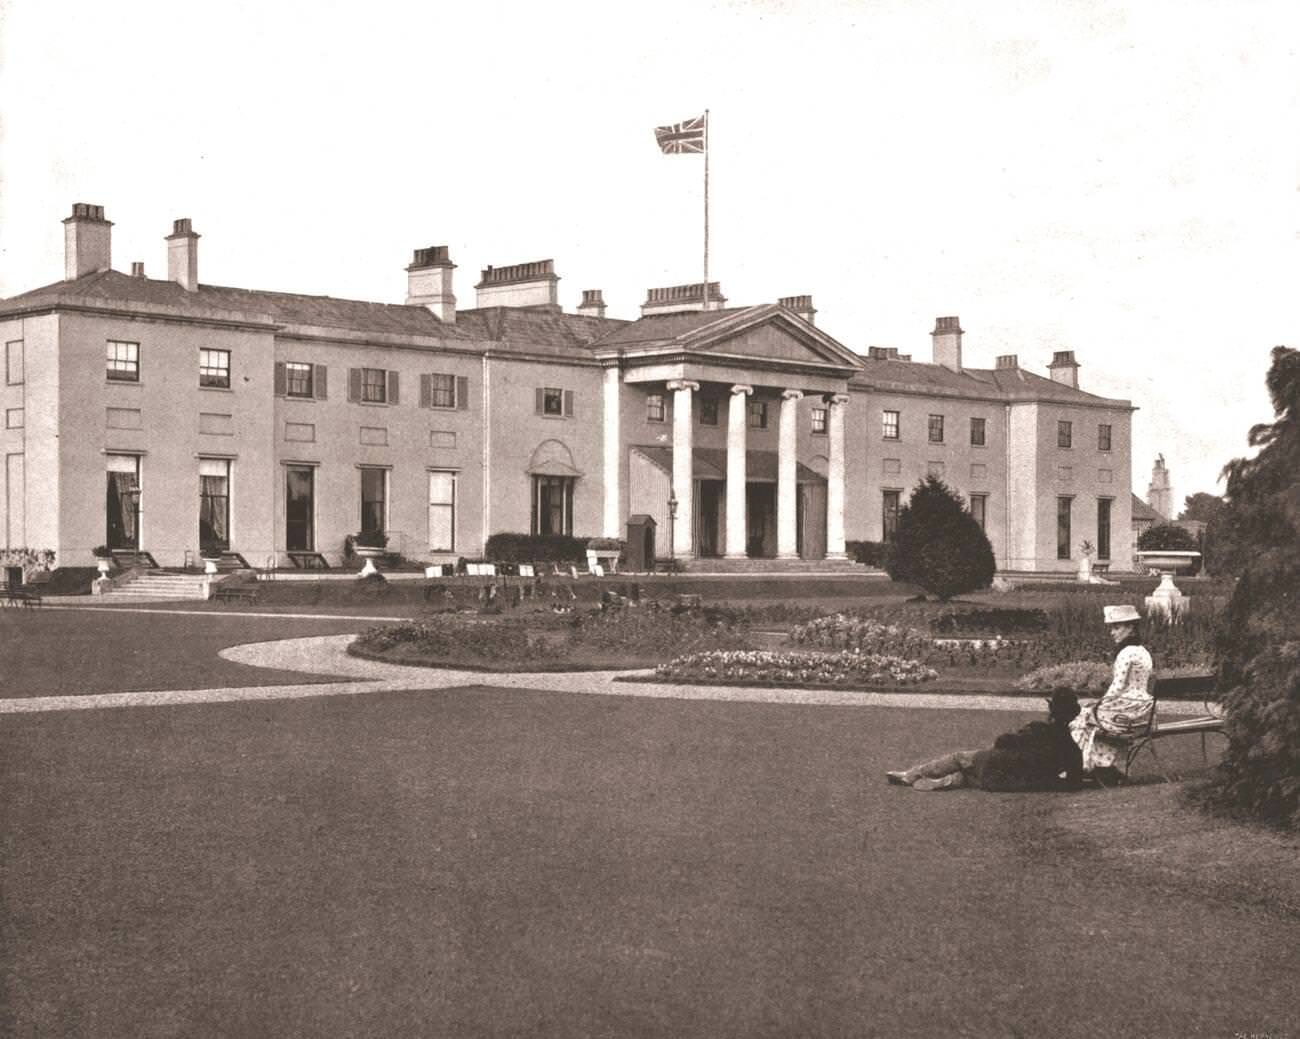 The Viceroy's Lodge, Dublin, Ireland, 1894